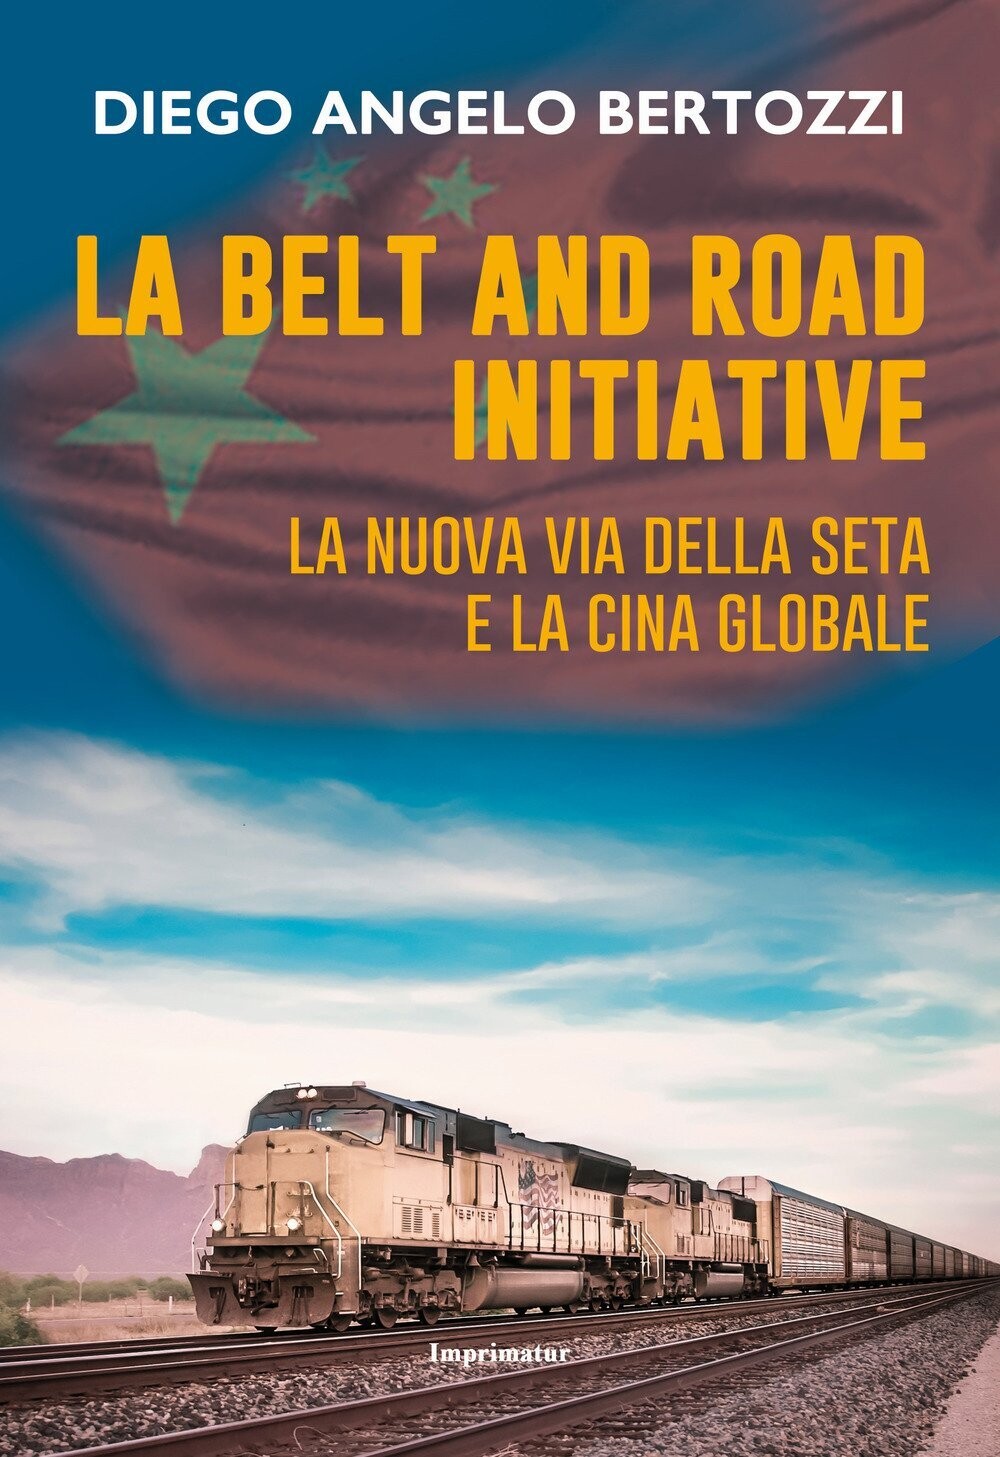 La Belt and road initiative